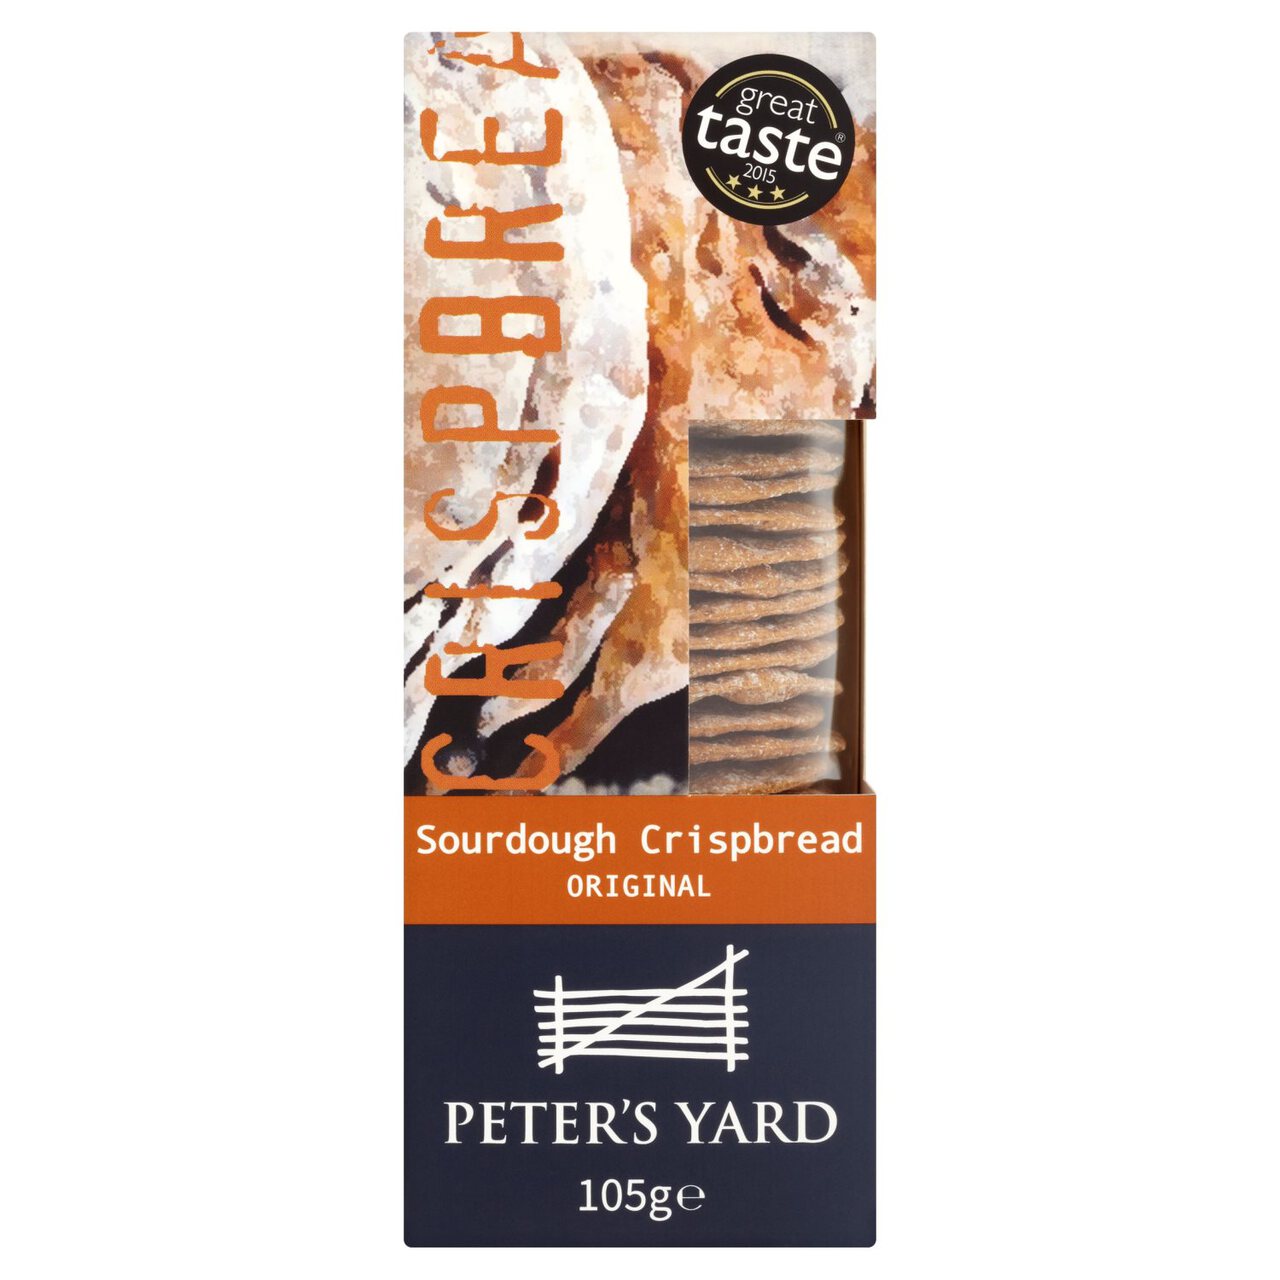 Peter's Yard Original Sourdough Crackers 90g